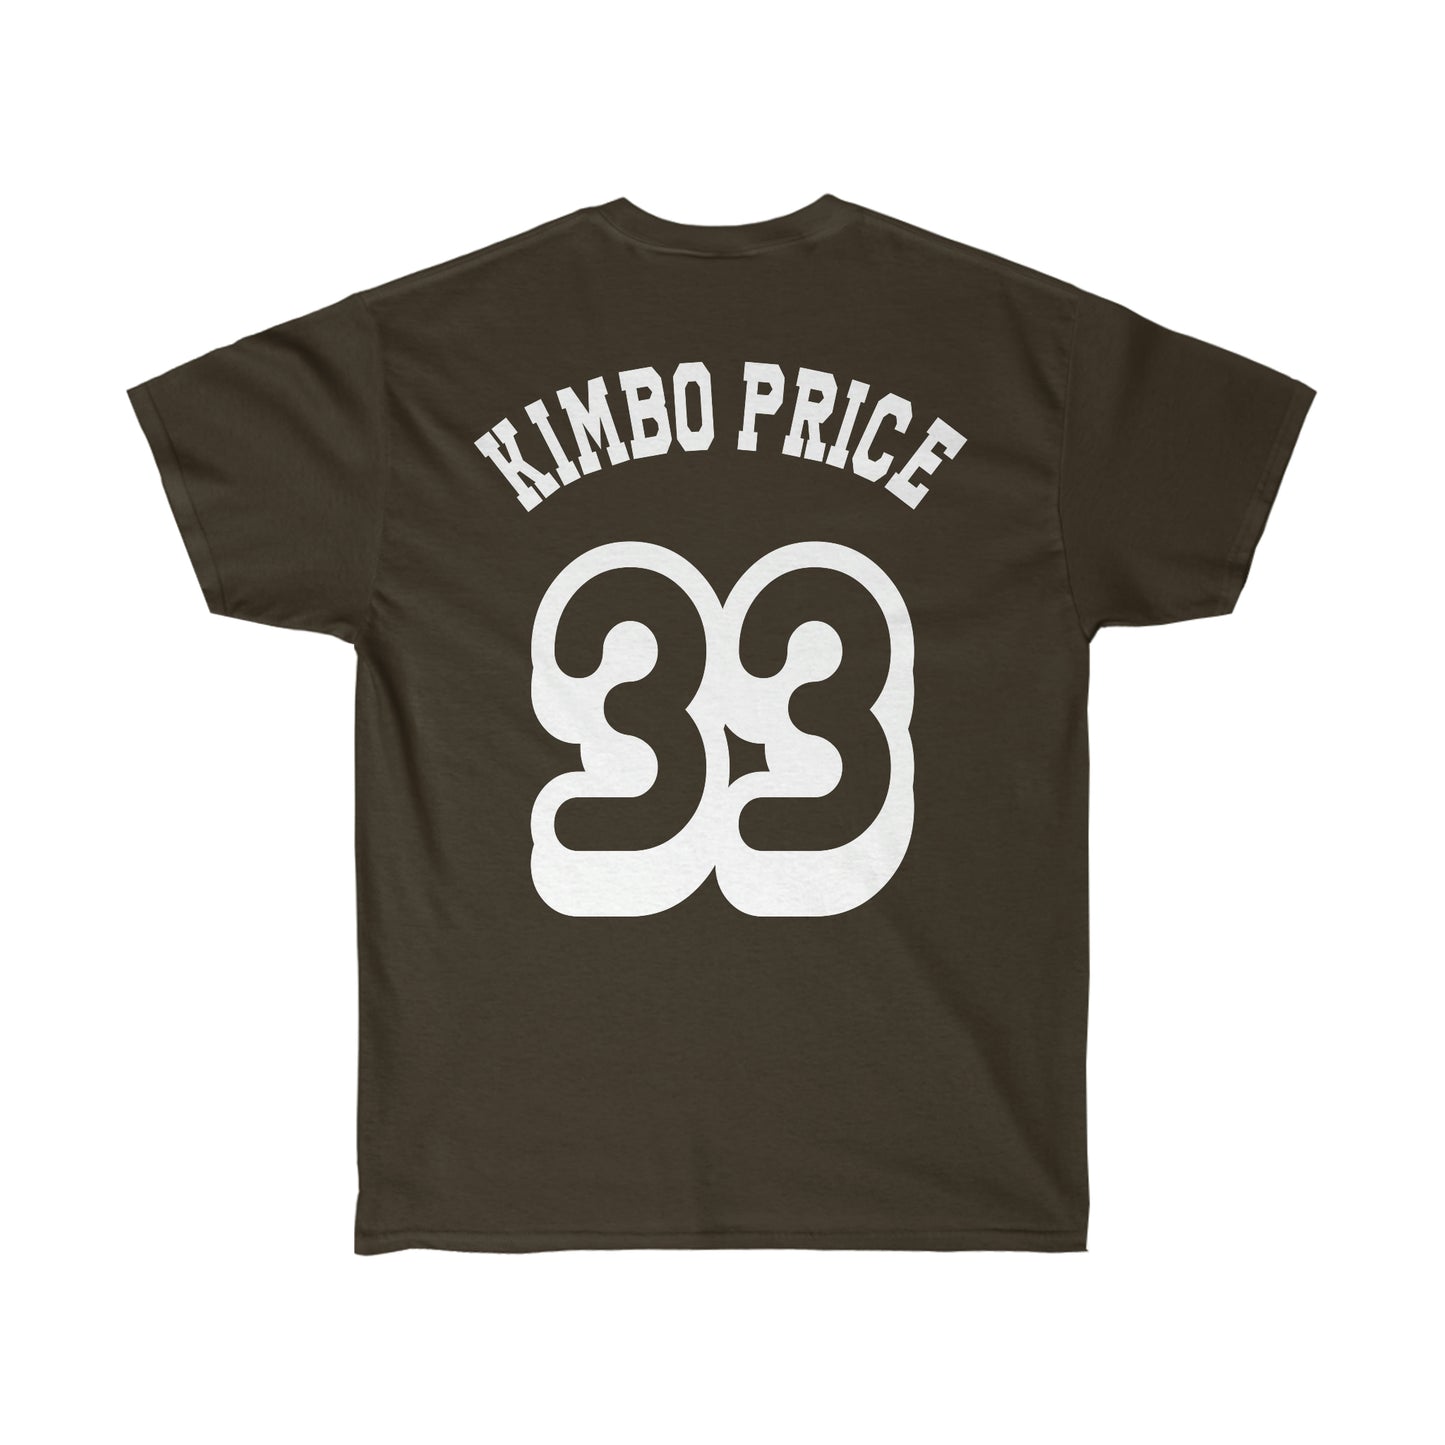 Sean Price - Kimbo Price Tee